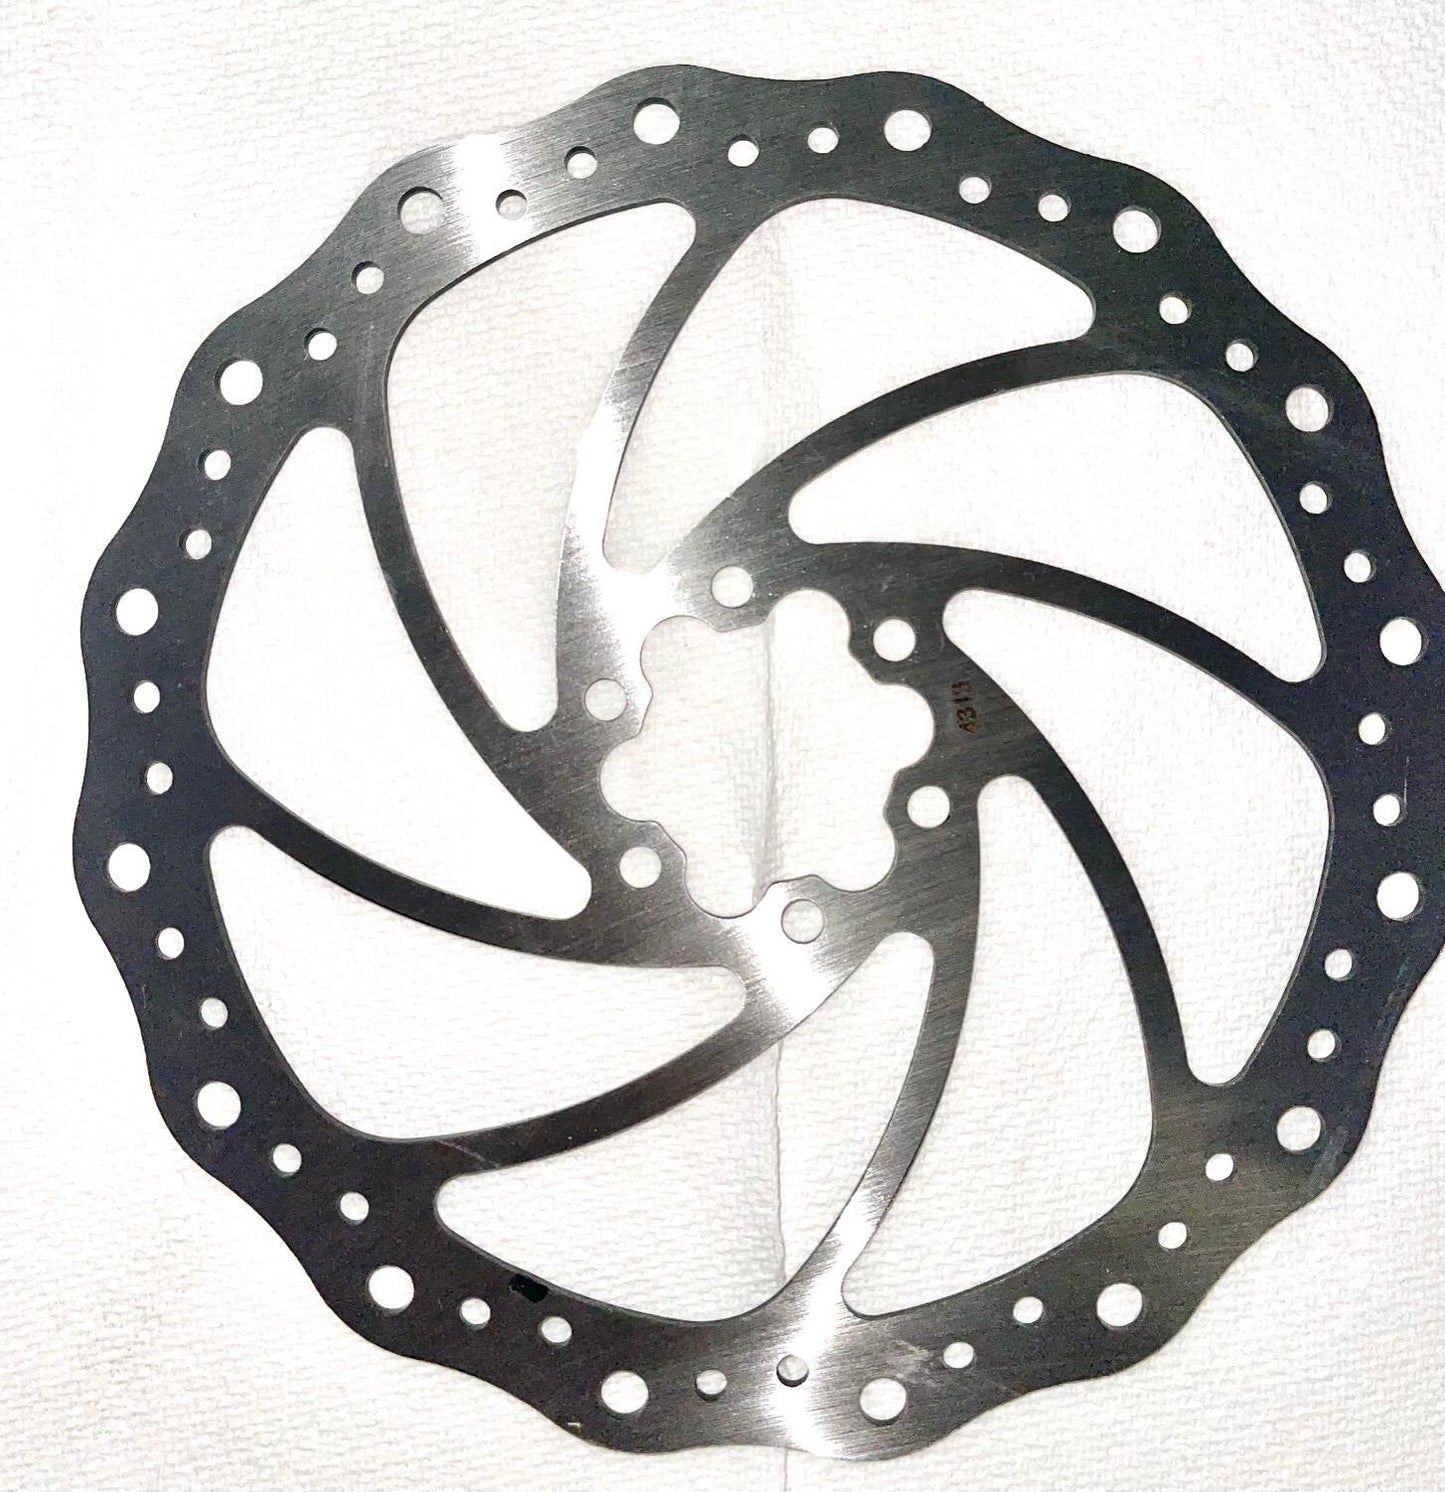 FSA Afterburner Disc Bike Brake Rotor 180mm 6-Bolt New - Random Bike Parts